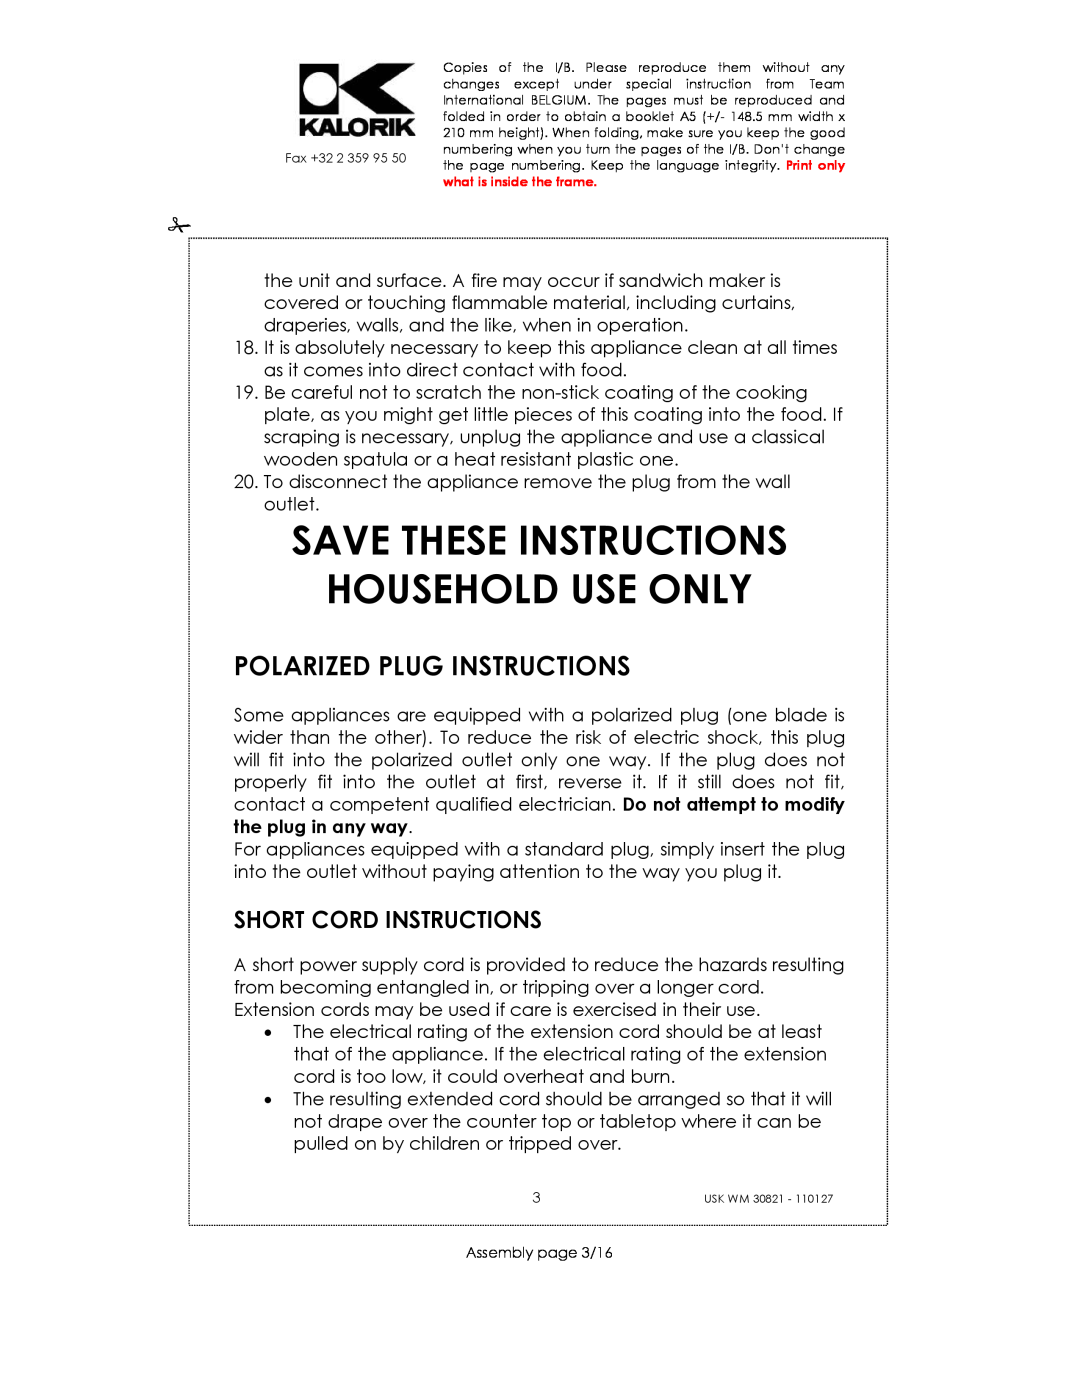 Kalorik USK WM 30821 Save These Instructions Household Use Only, Polarized Plug Instructions, Short Cord Instructions 